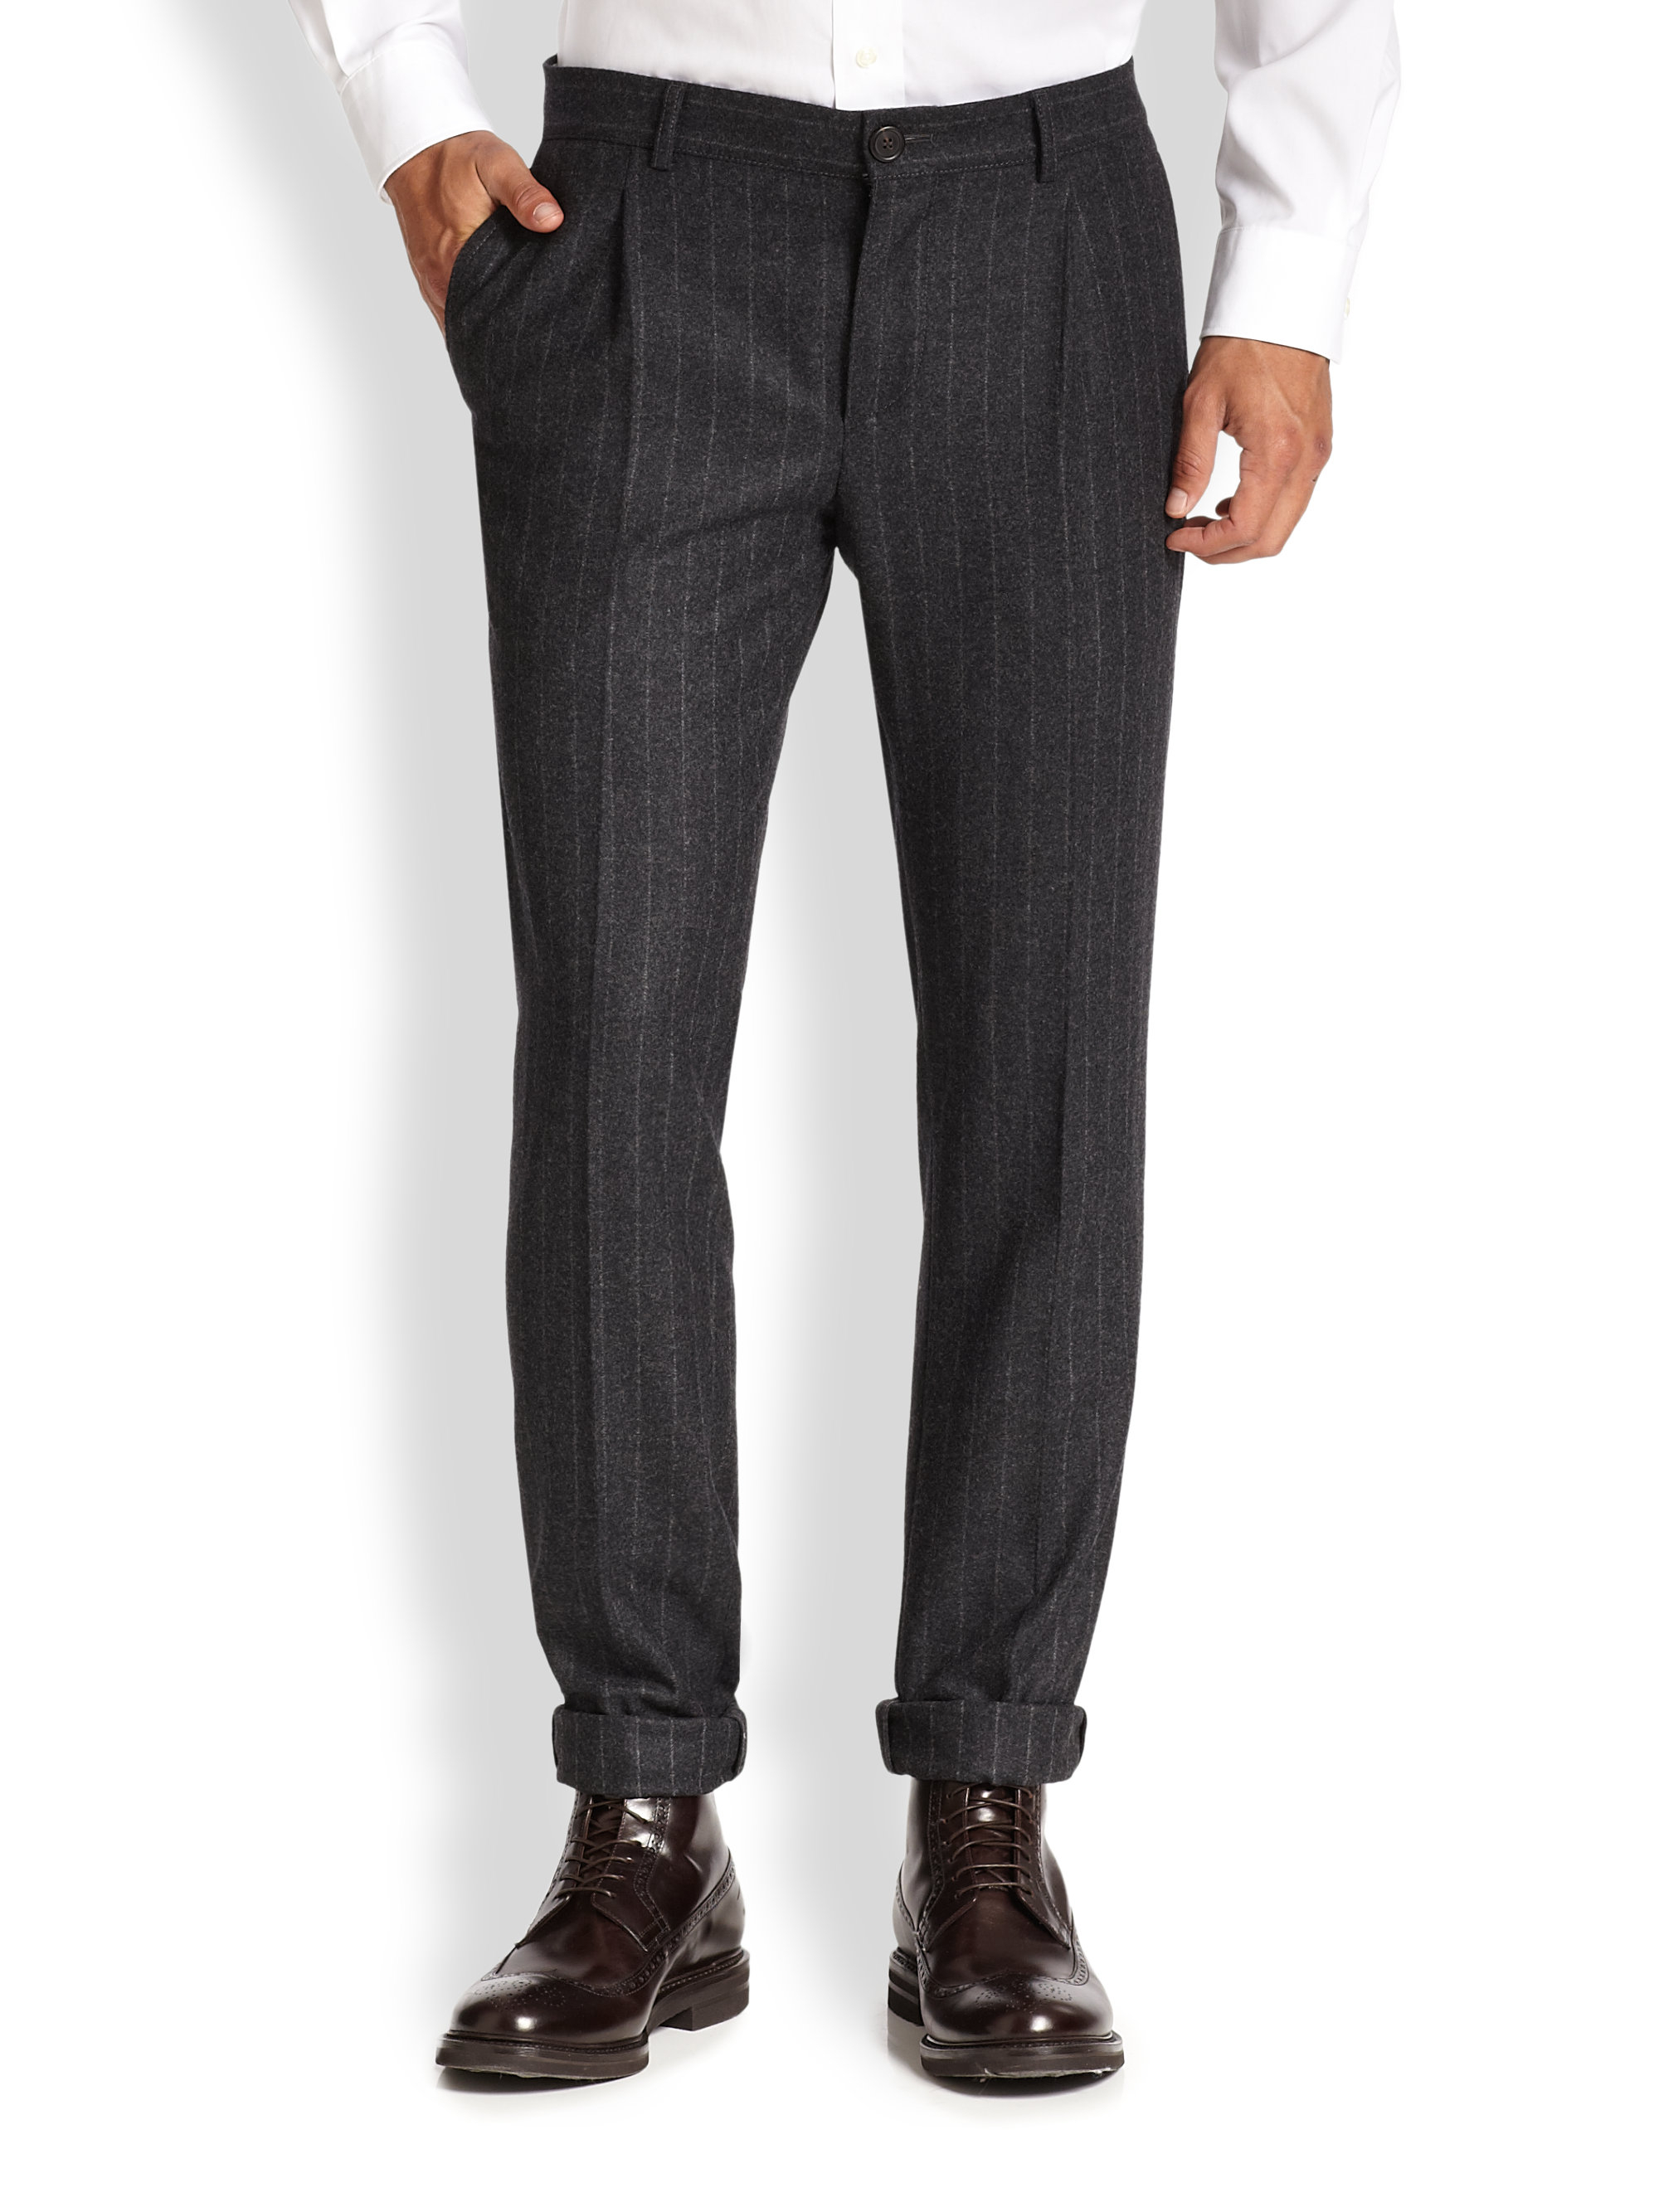 Lyst - Brunello Cucinelli Striped Wool Pants in Gray for Men